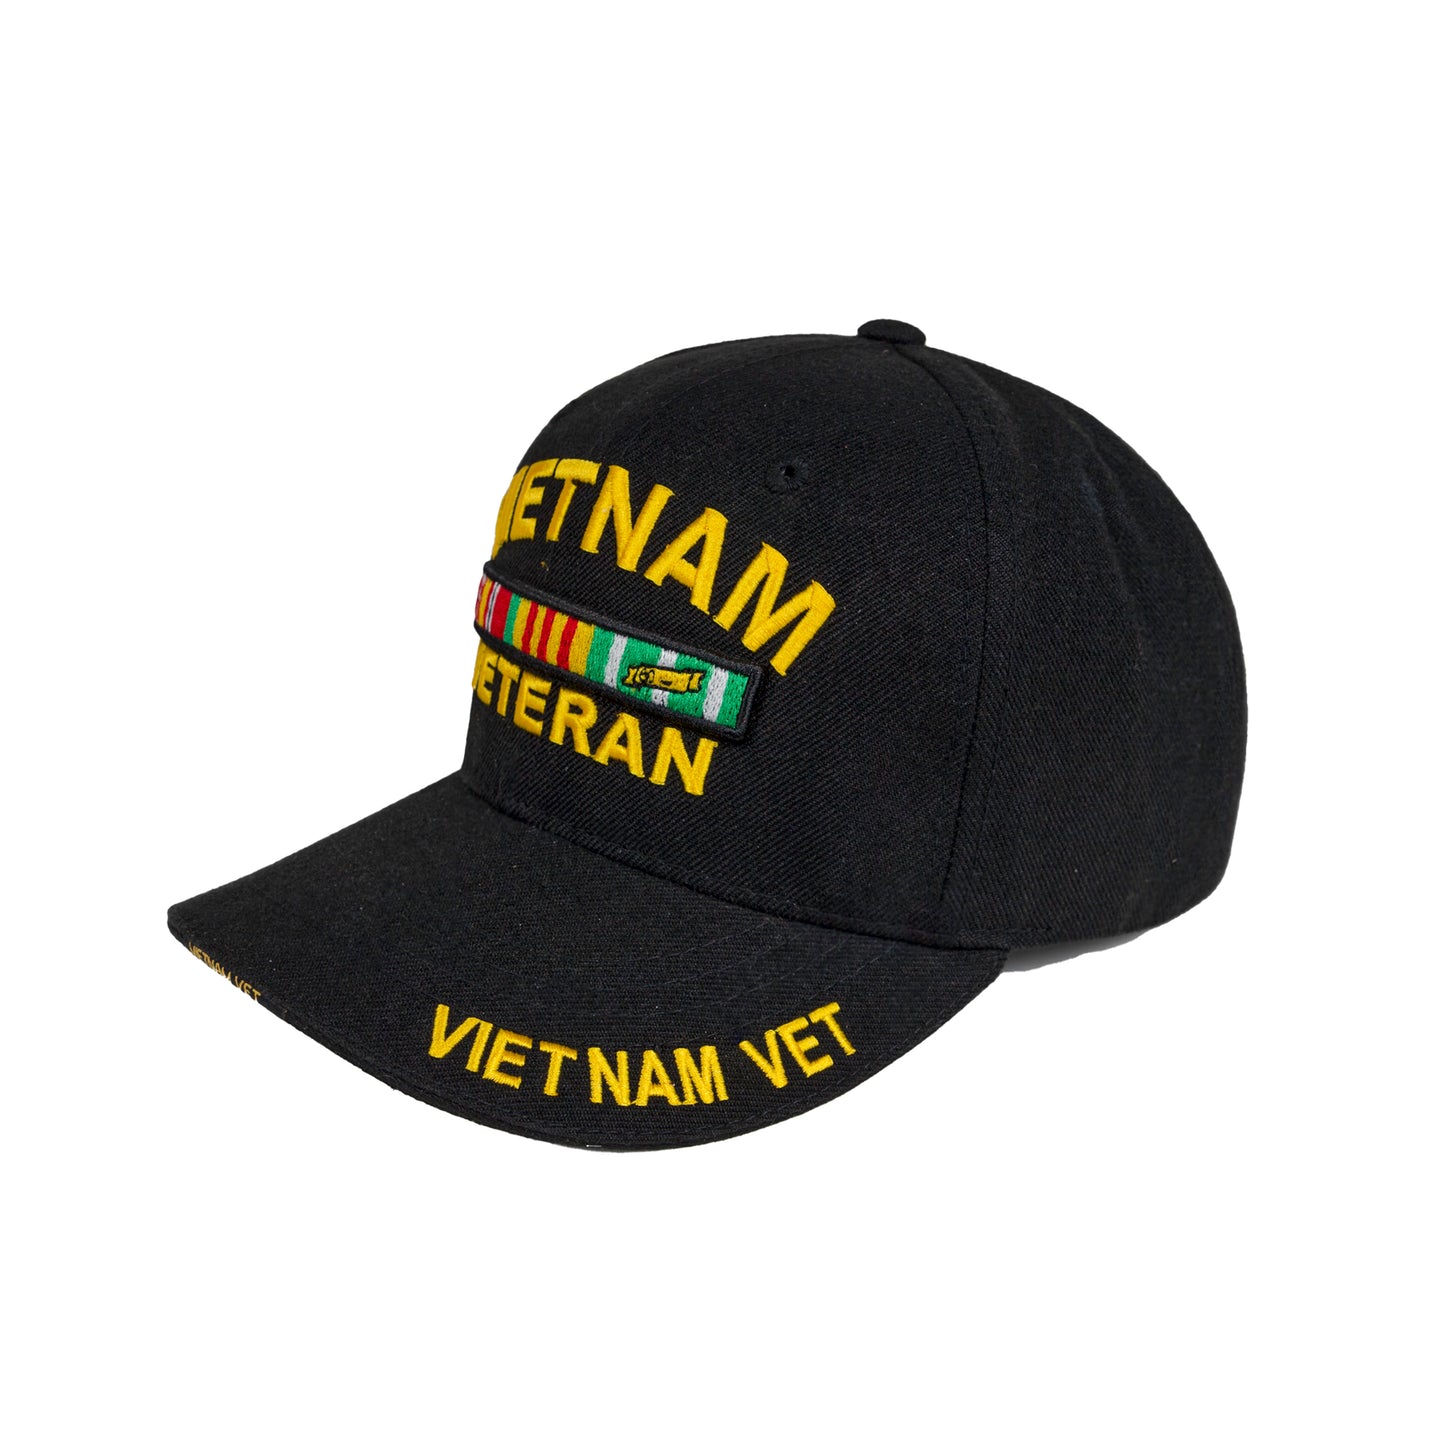 Vietnam Veteran Hat-Black